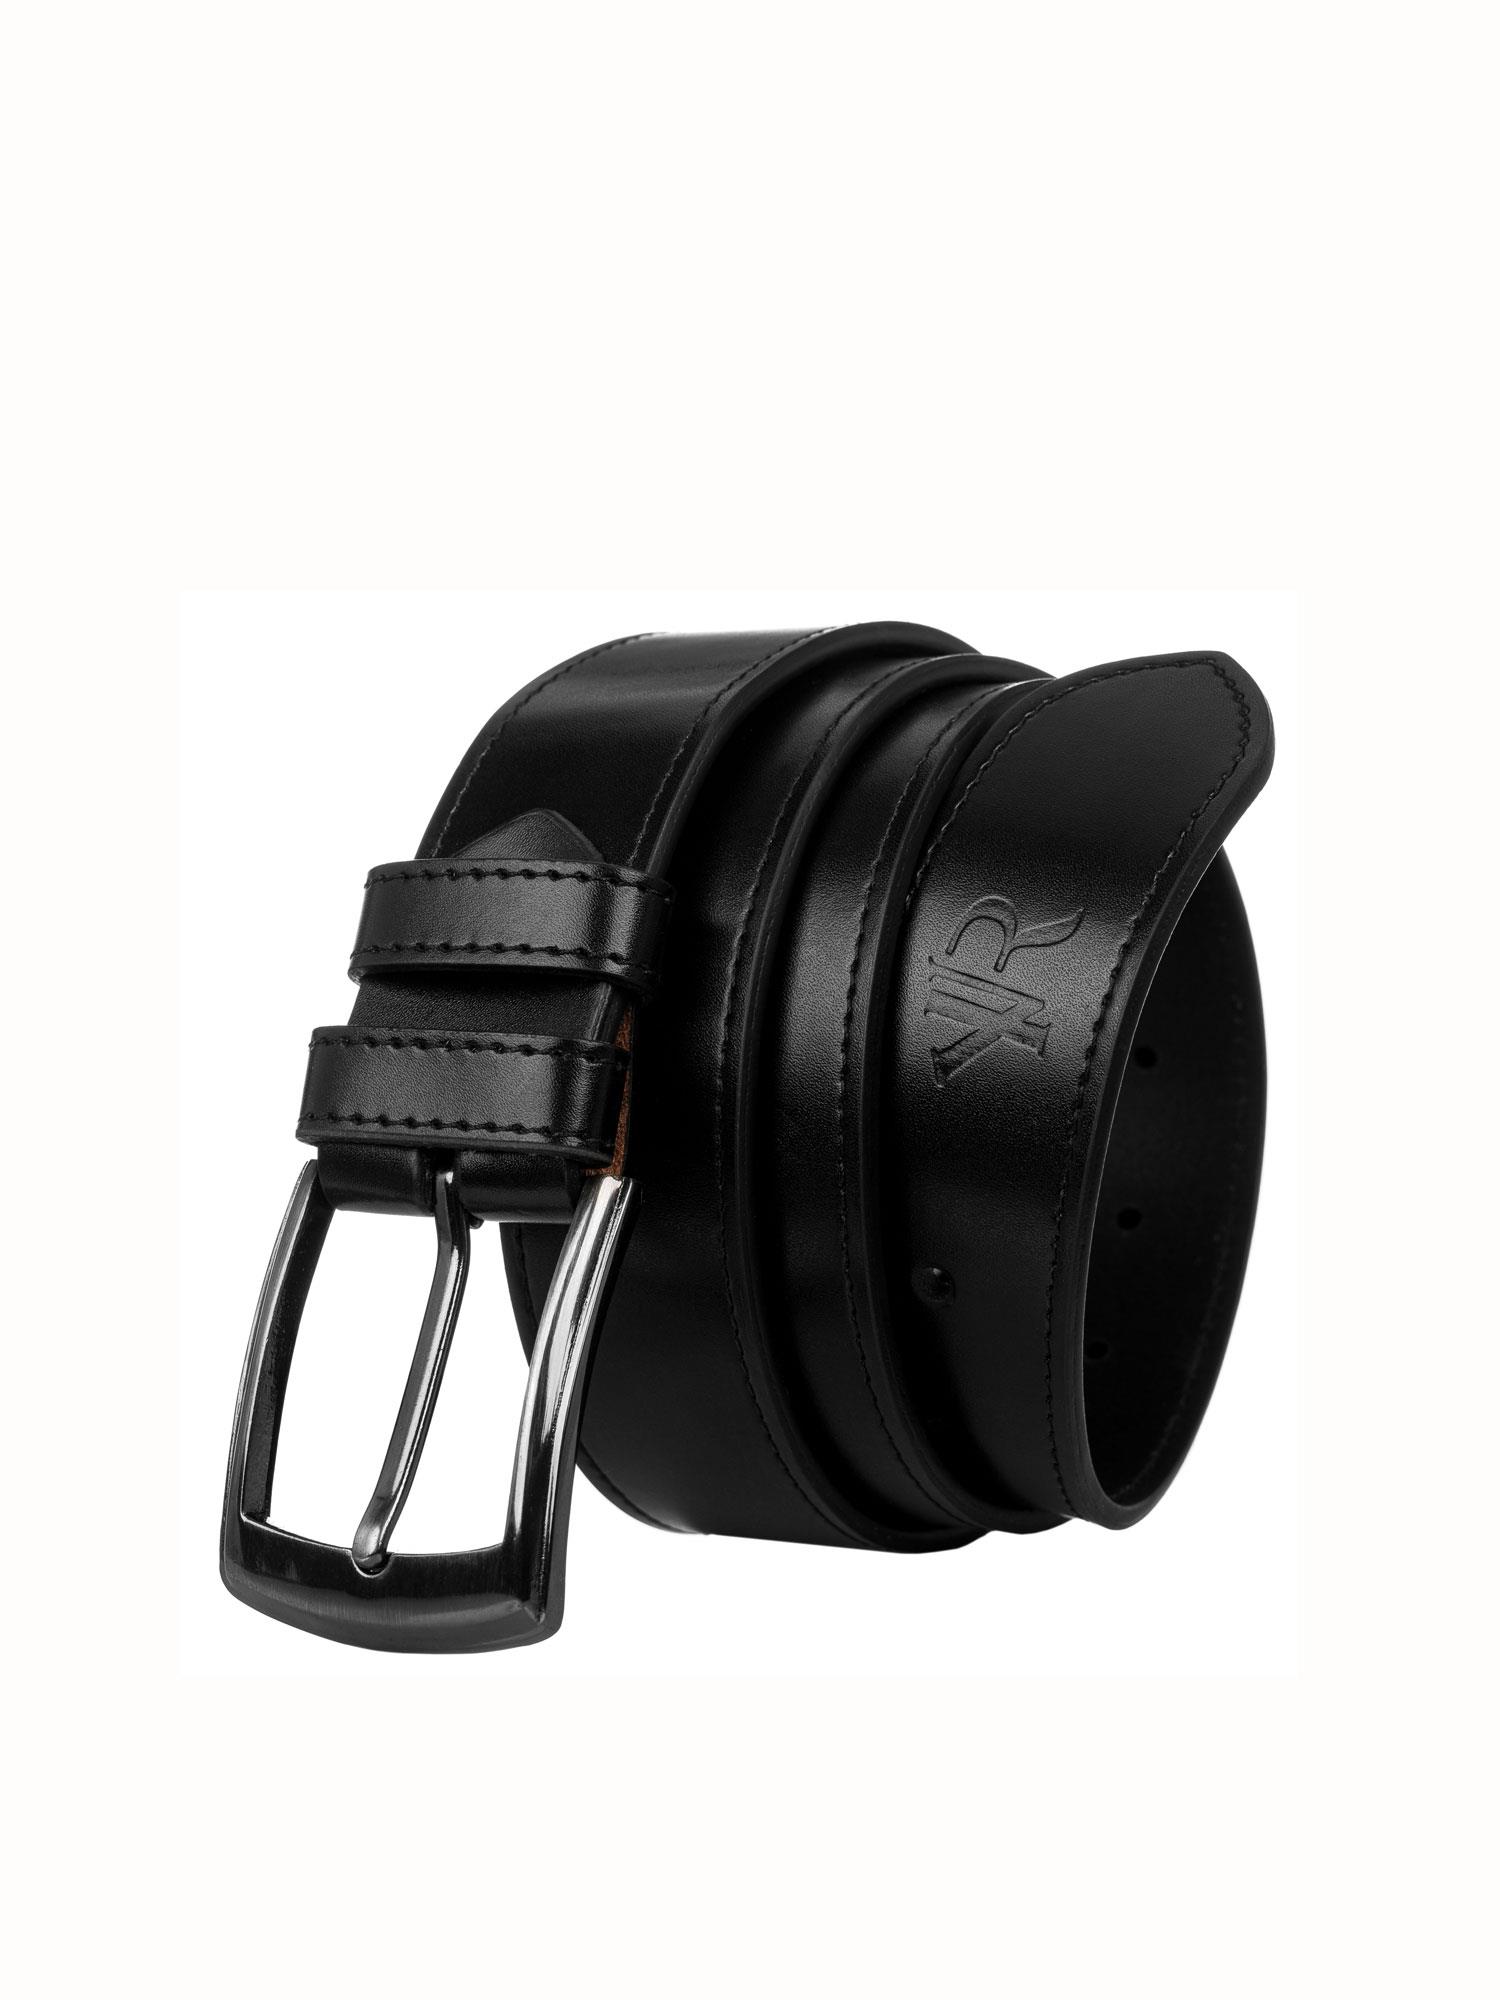 Muži Opasky - Black men's genuine leather belt